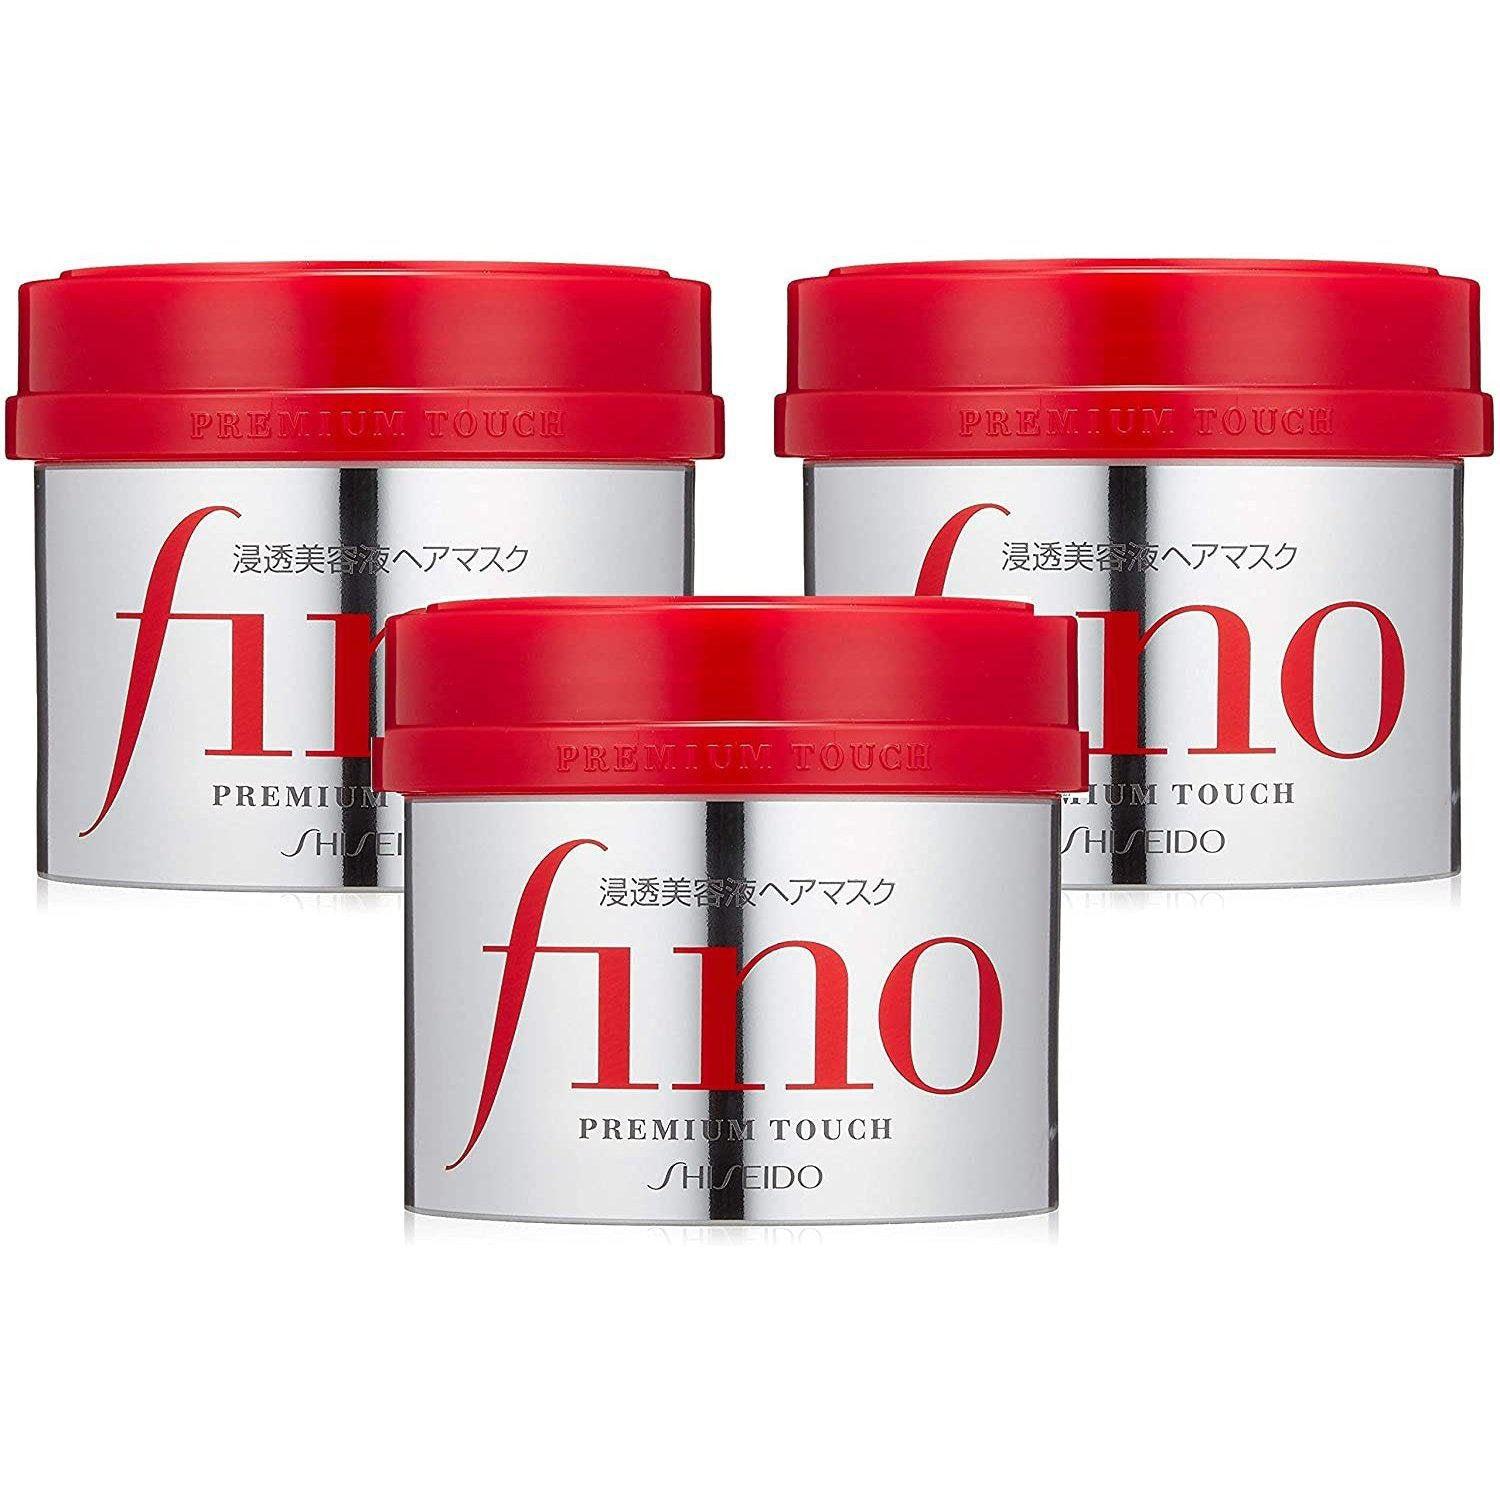 Shiseido Fino Premium Touch Hair Mask (Pack of 3)